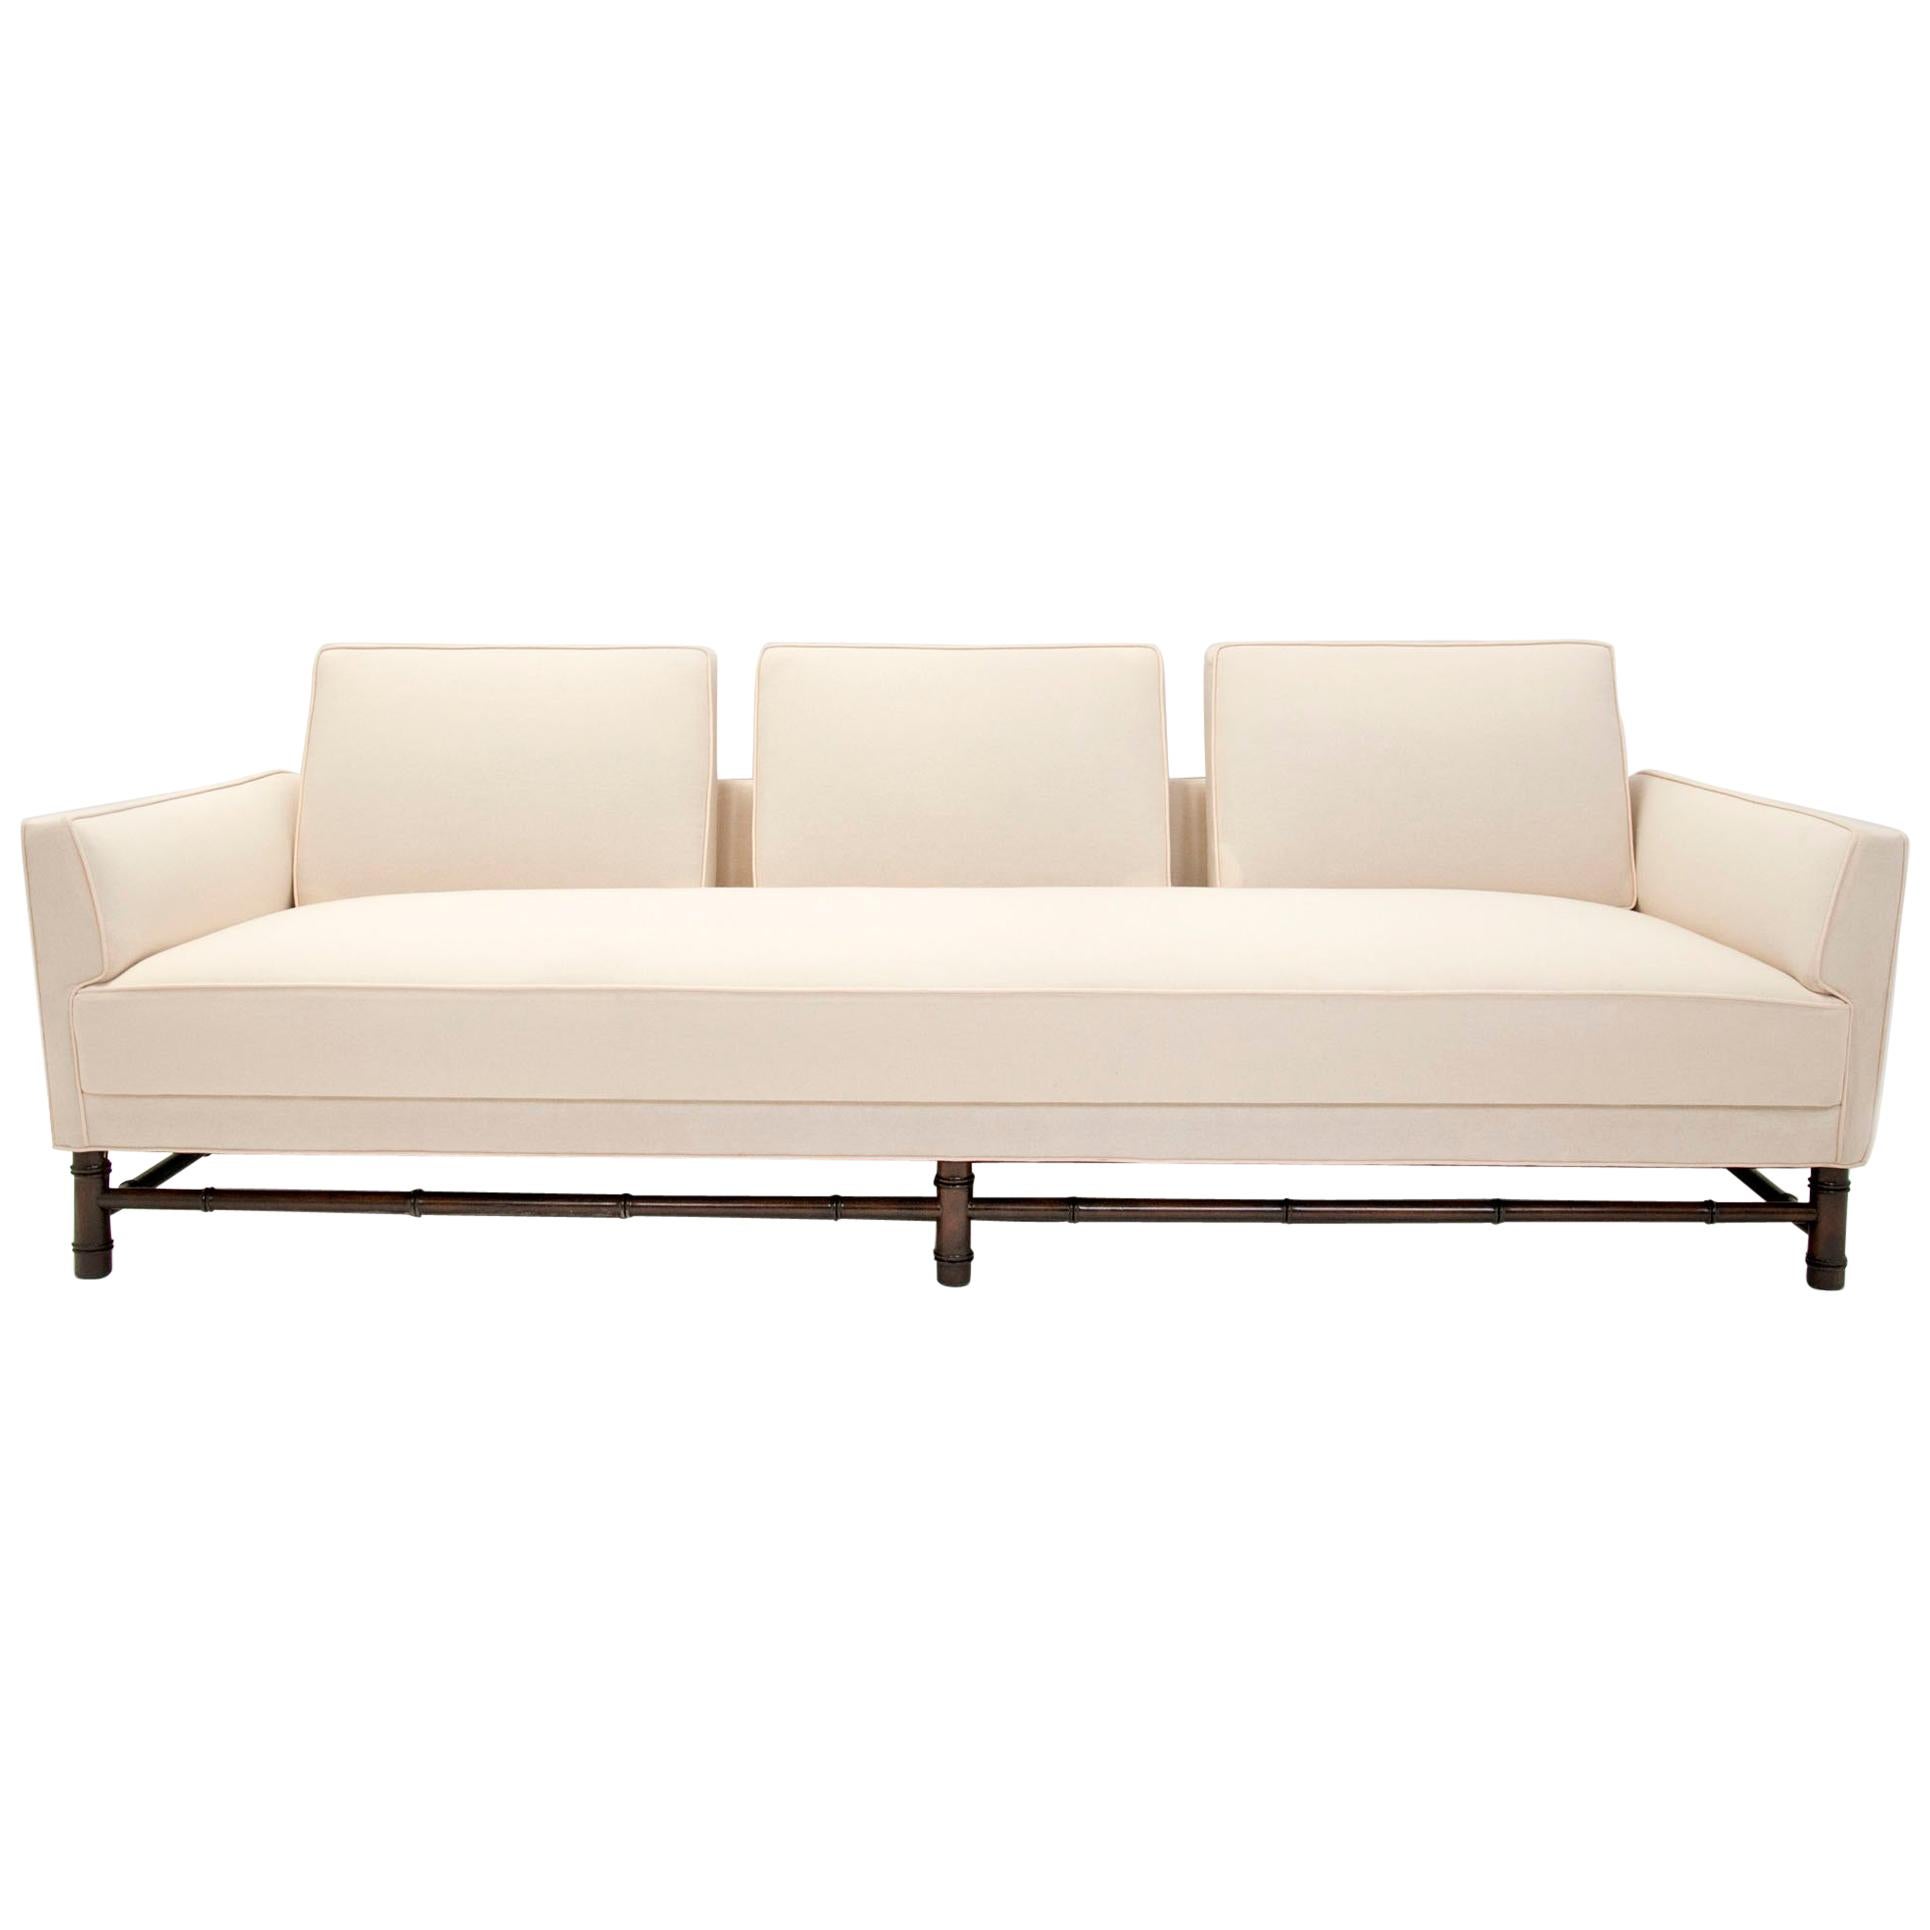 Mid-Century Modern Sofa on Faux Bamboo Base